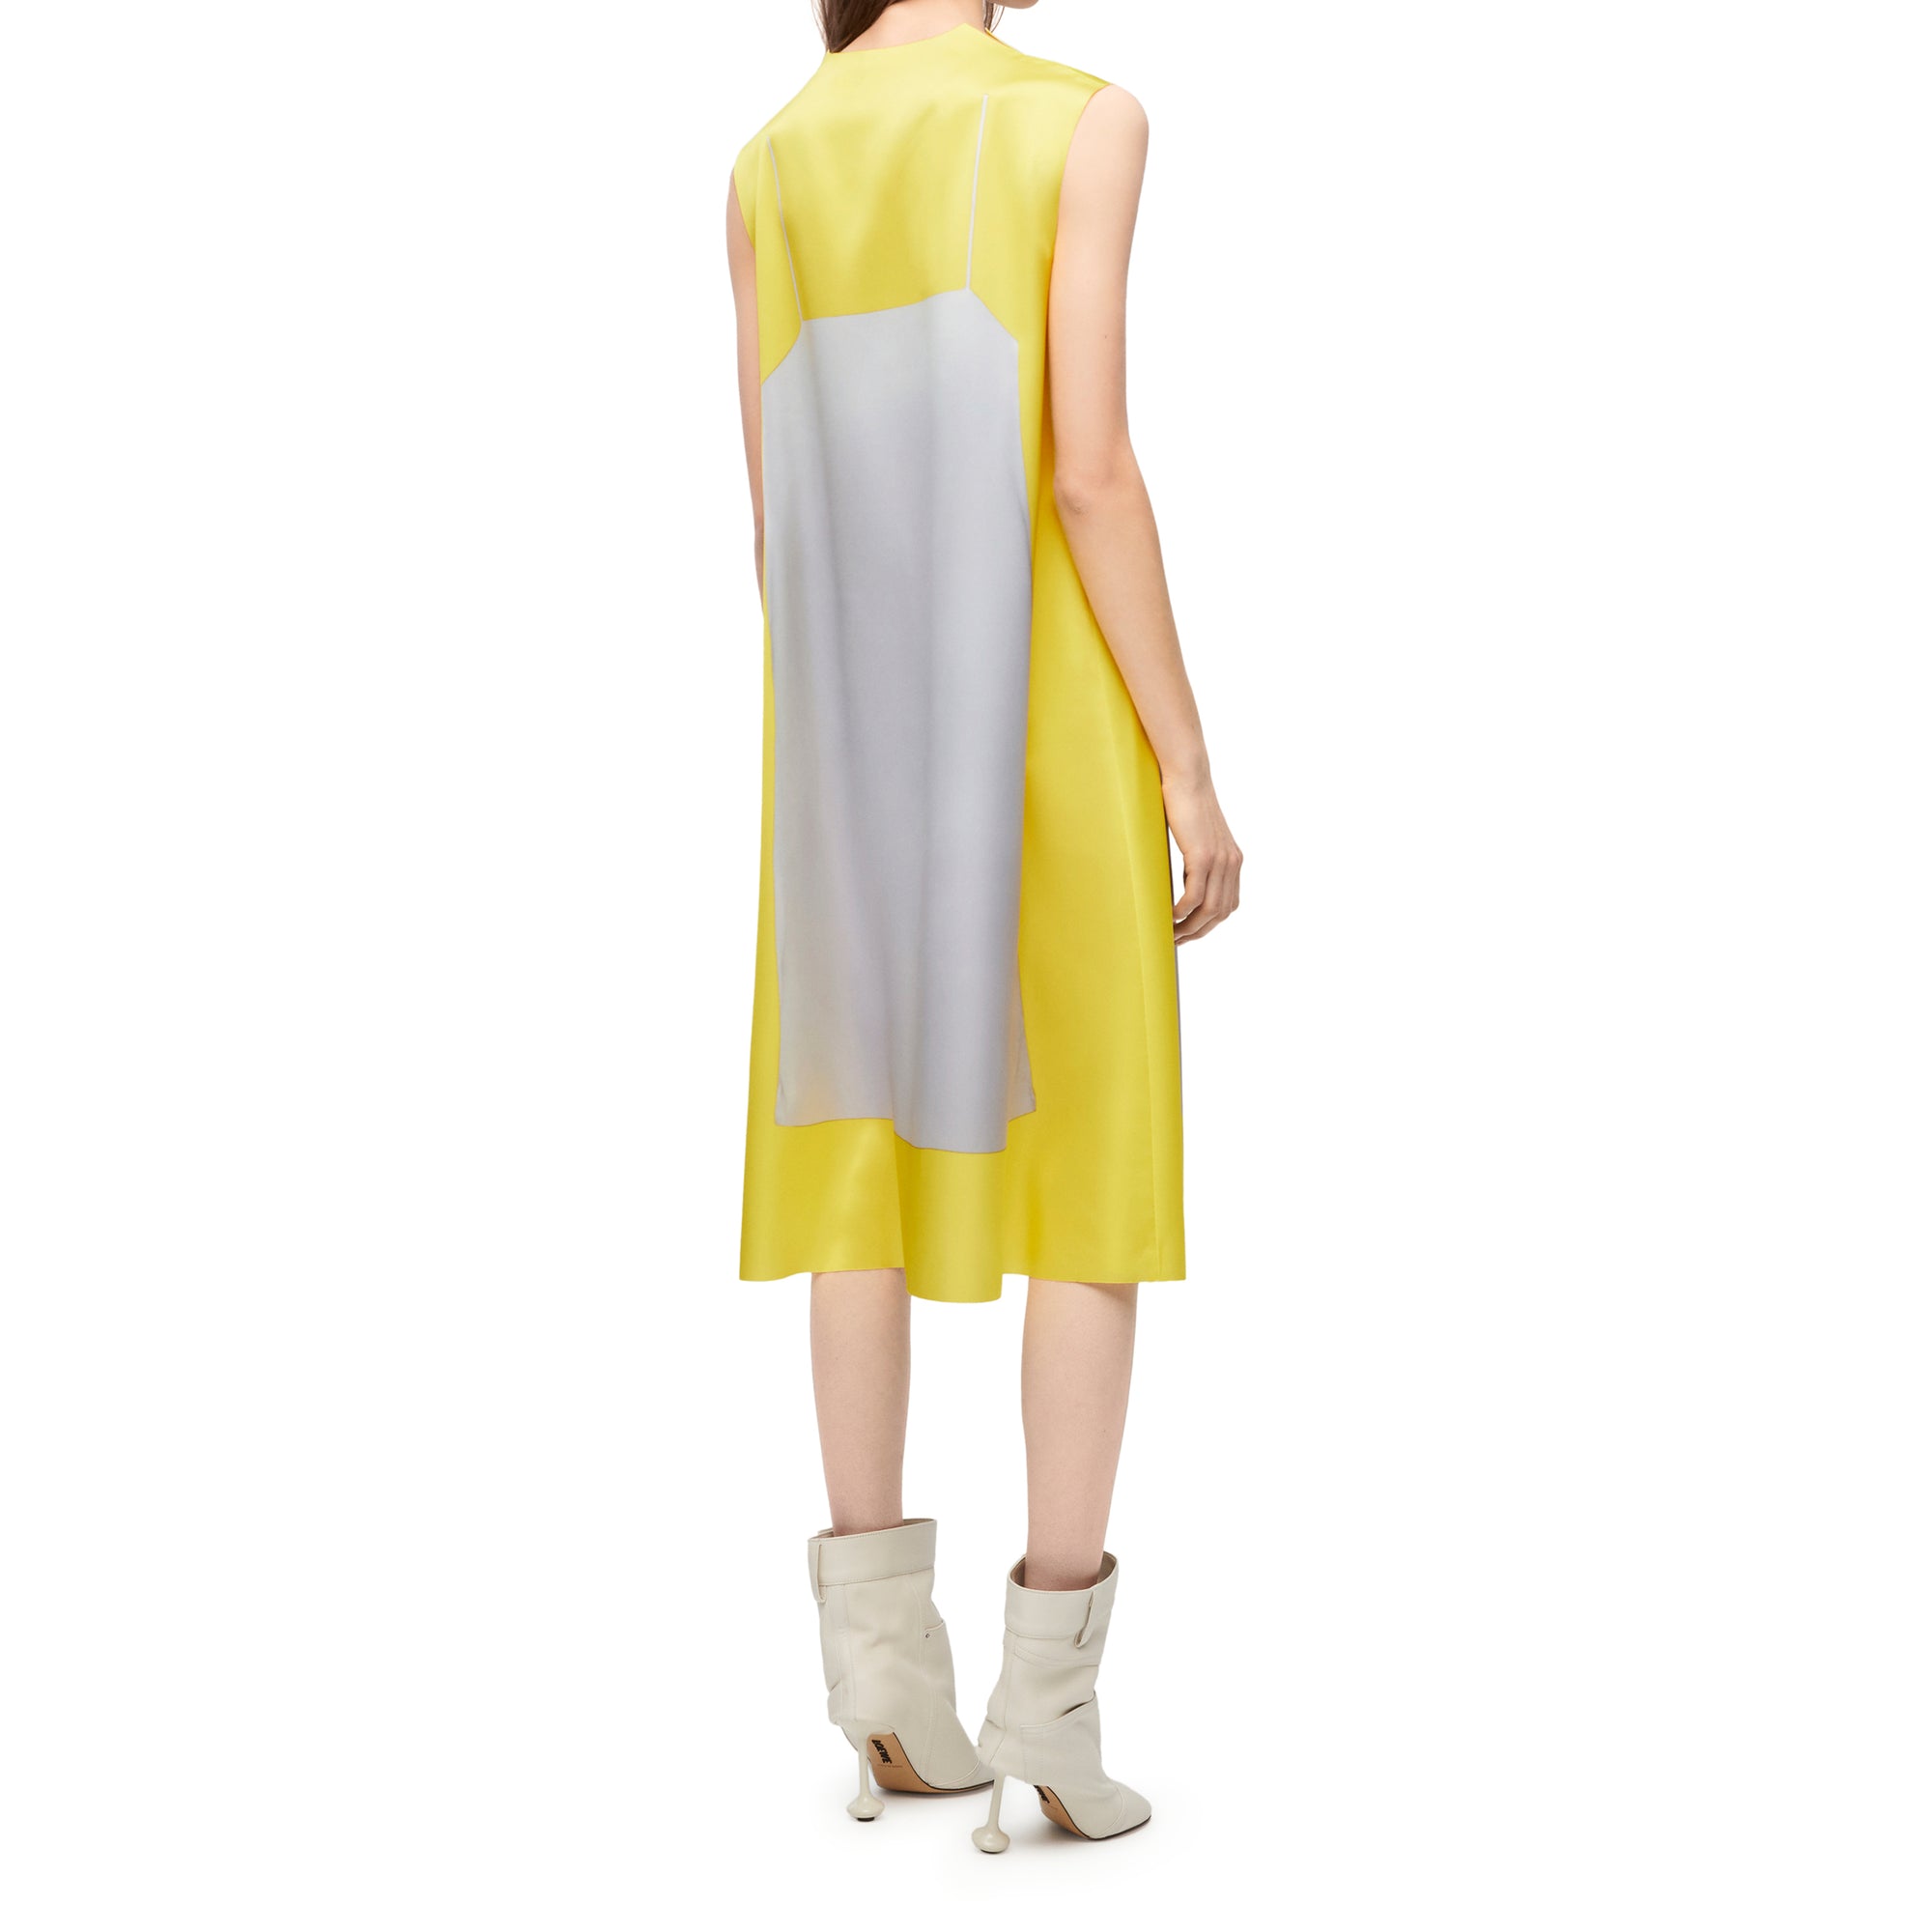 Loewe - Women’s A-Line Dress - (Yellow/Grey) view 4